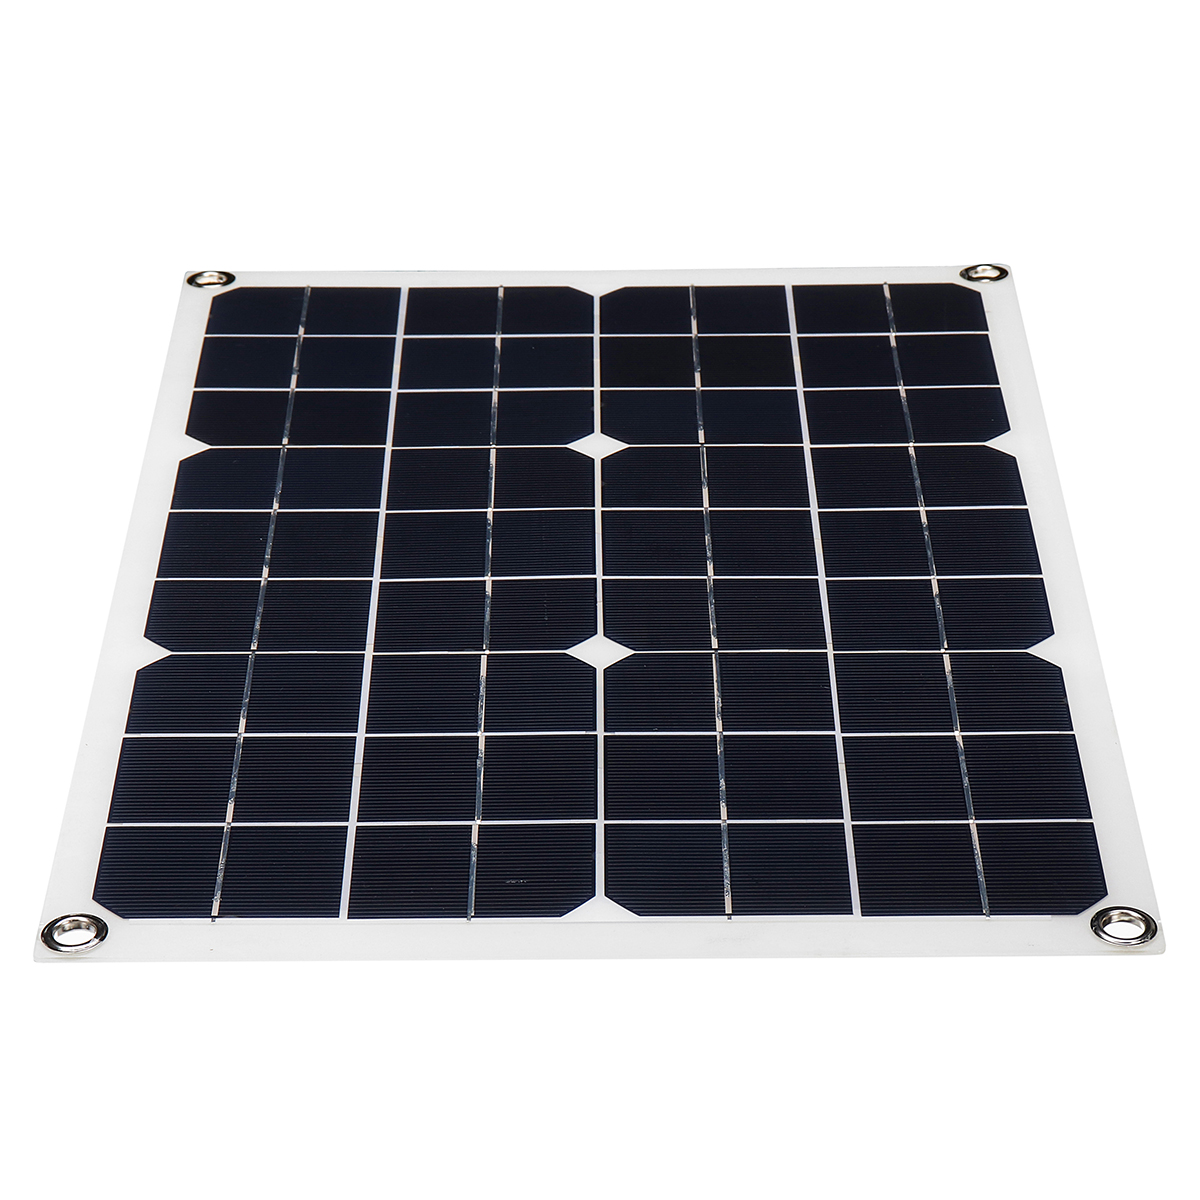 20W 430*280*2.5mm Monocrystalline Solar Panel with 18V DC Plug & 5V USB Output High Efficiency & Light Weight 37